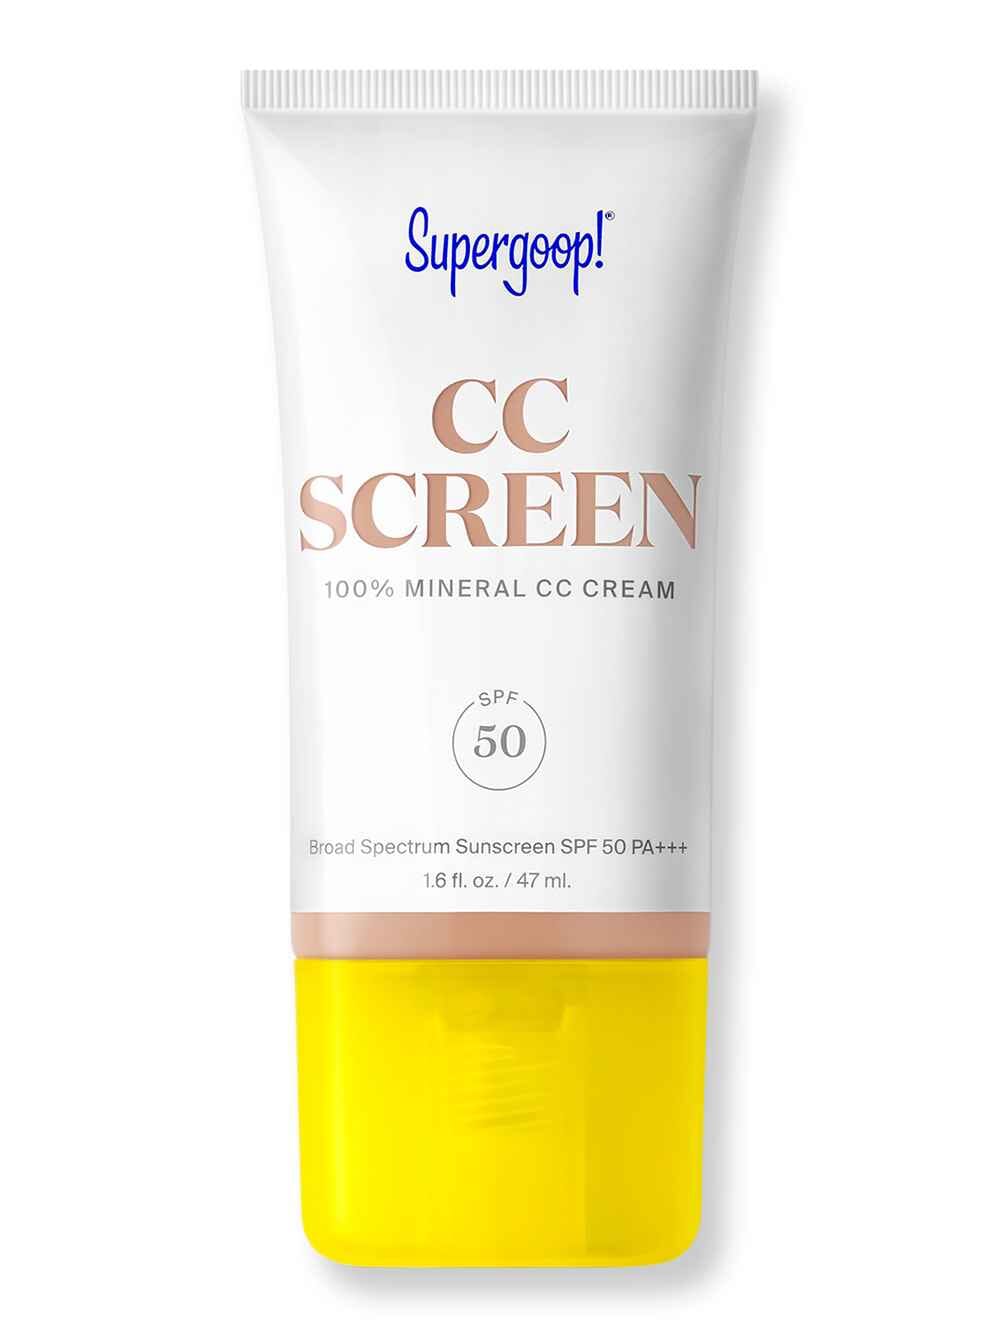 Supergoop Supergoop CC Screen 100% Mineral CC Cream SPF 50 1.6 fl oz47 ml226W Light with Warm Undertones BB & CC Creams 